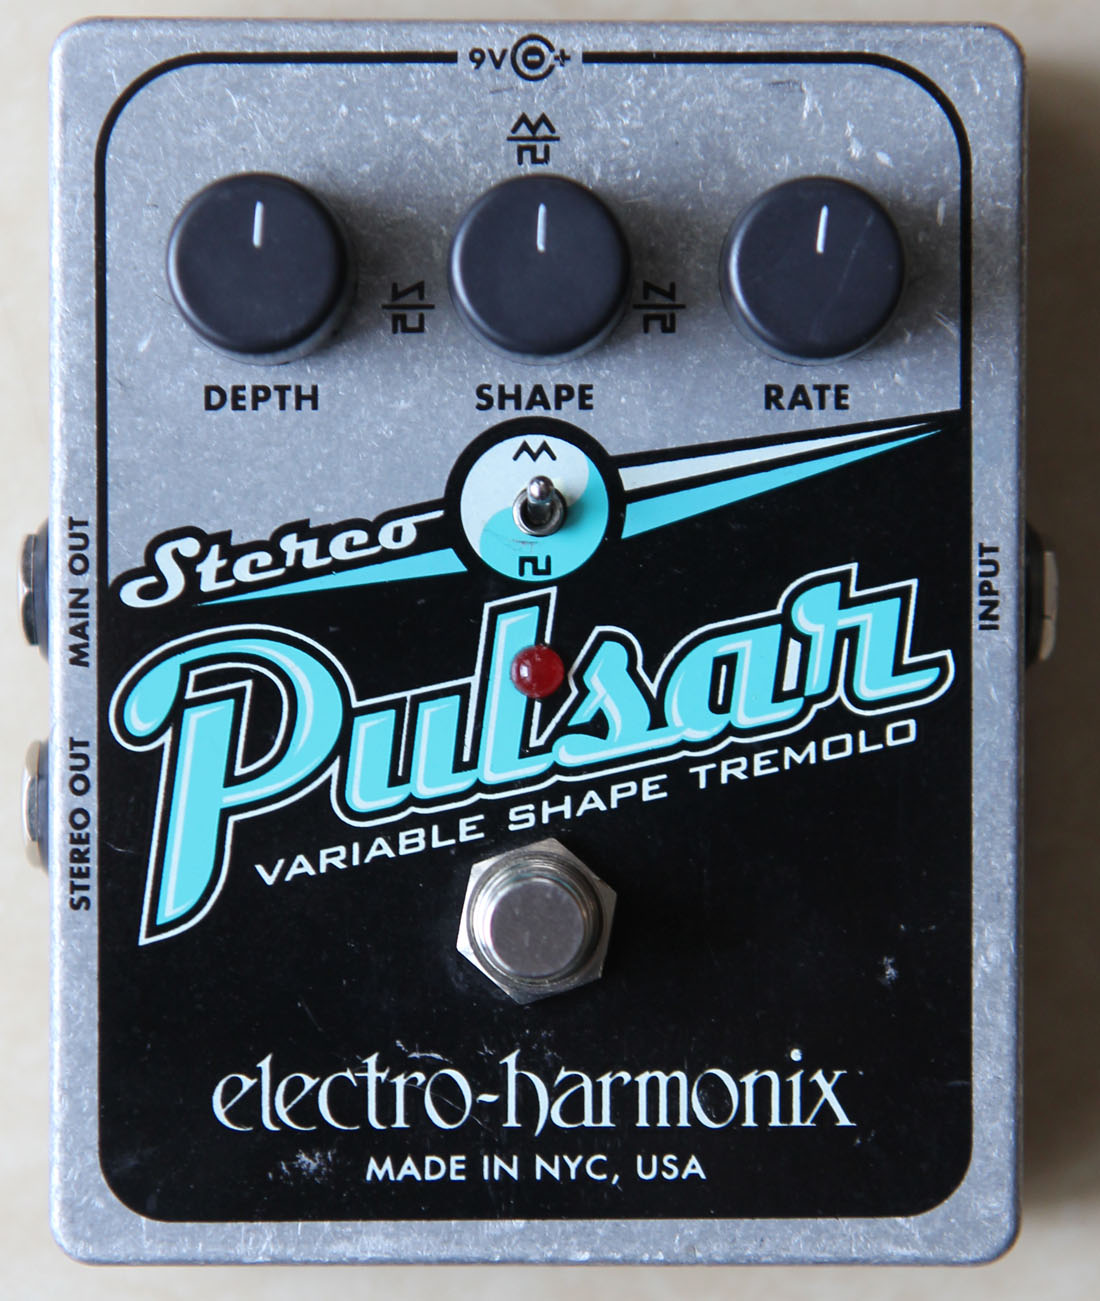 electro-harmonix-stereo-pulsar-500119.jpg